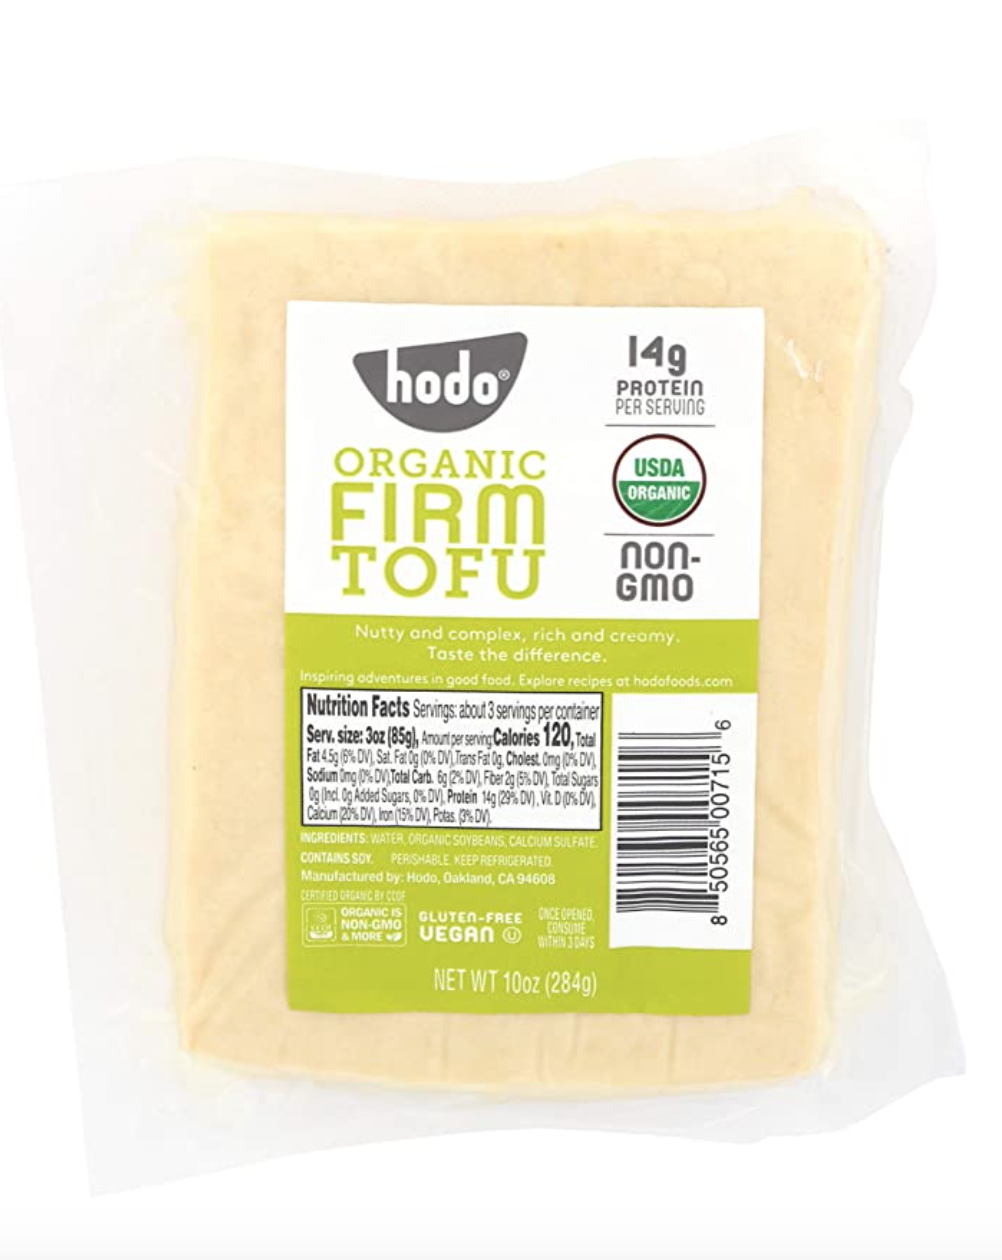 14g Protein/Serving Hodo Firm Tofu amazon